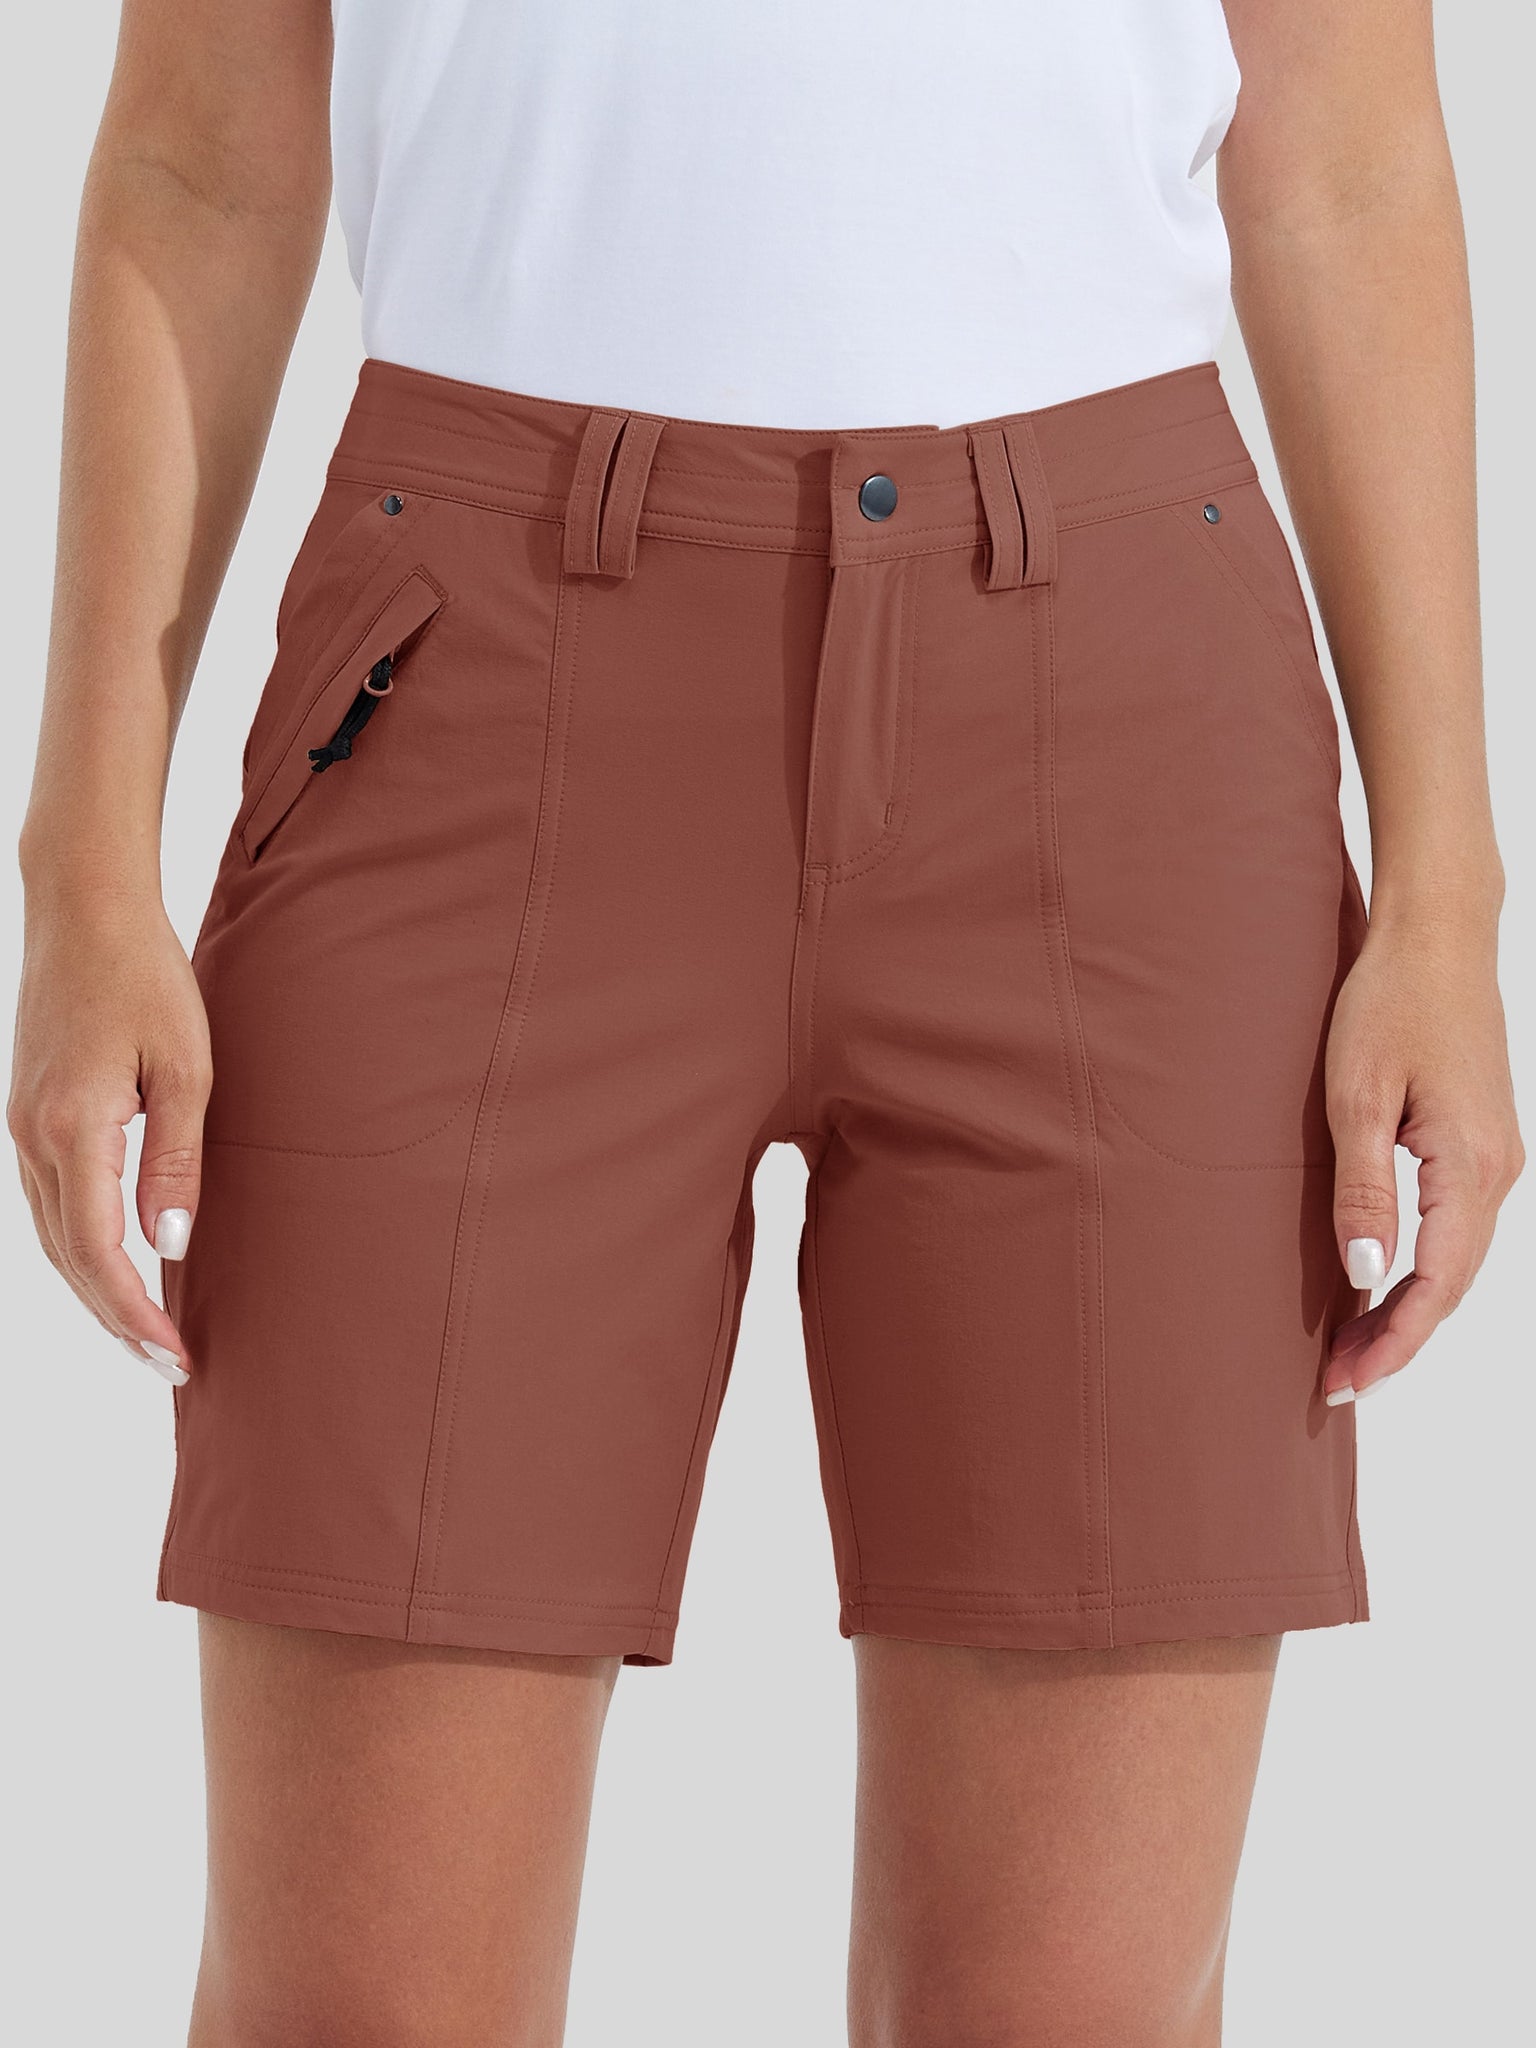 Women's Outdoor Golf Shorts Water-Resistant 7 Inch